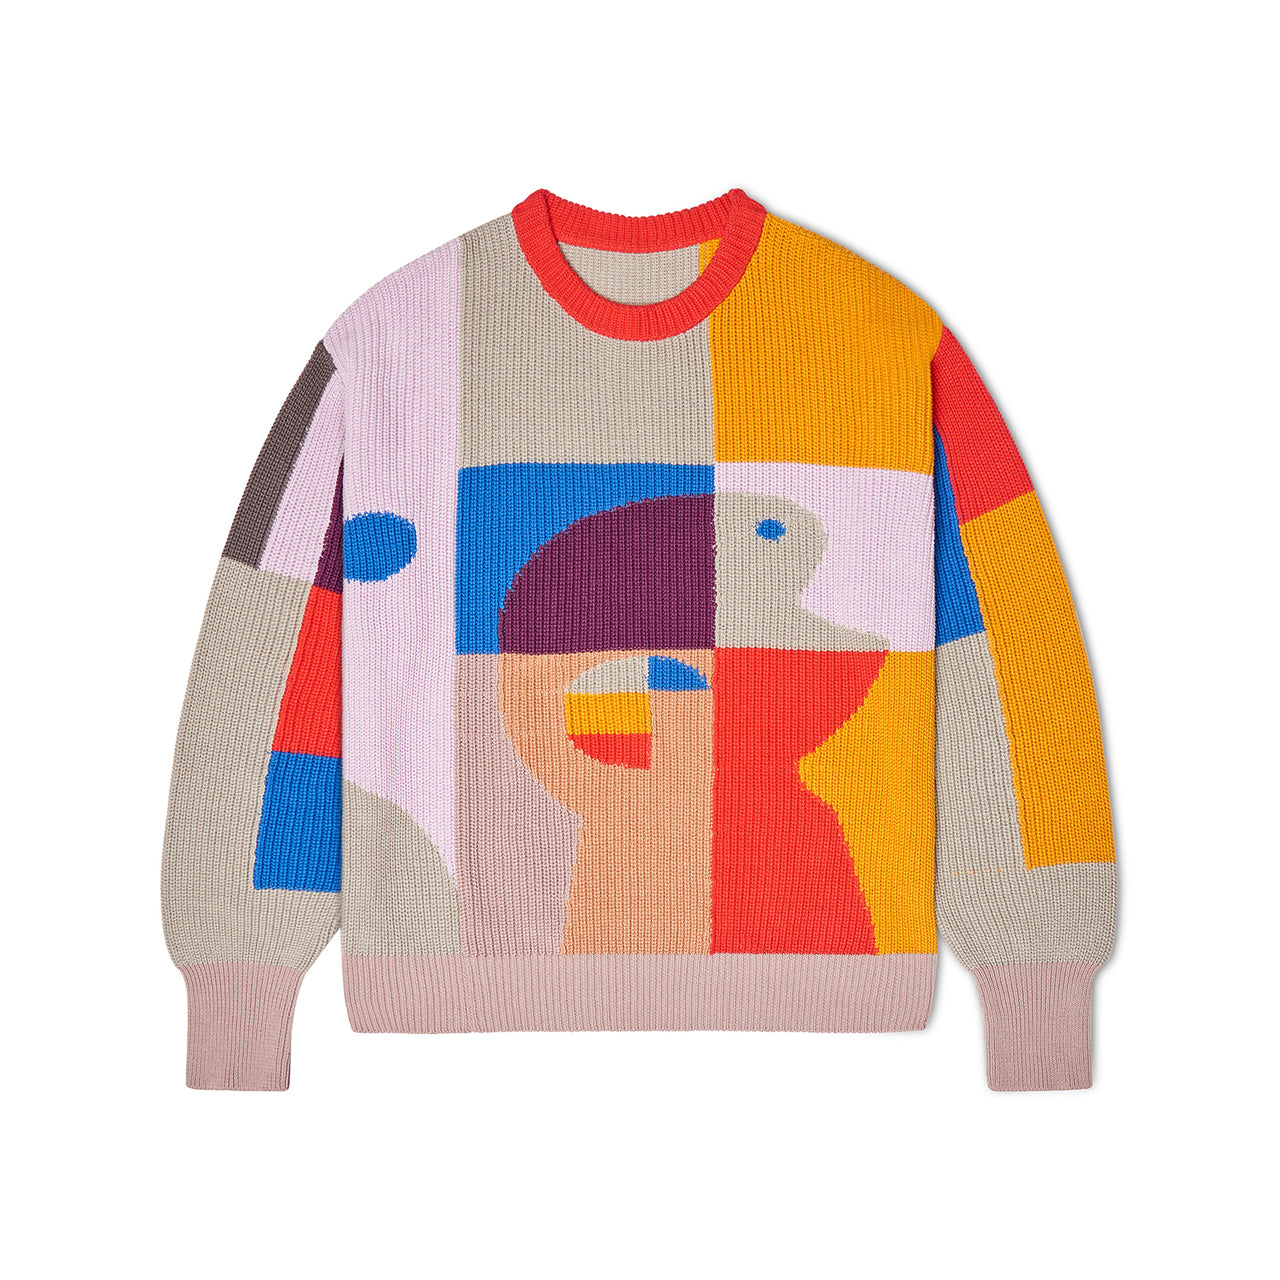 Bauhaus Paint Palette Sweater [Multi]